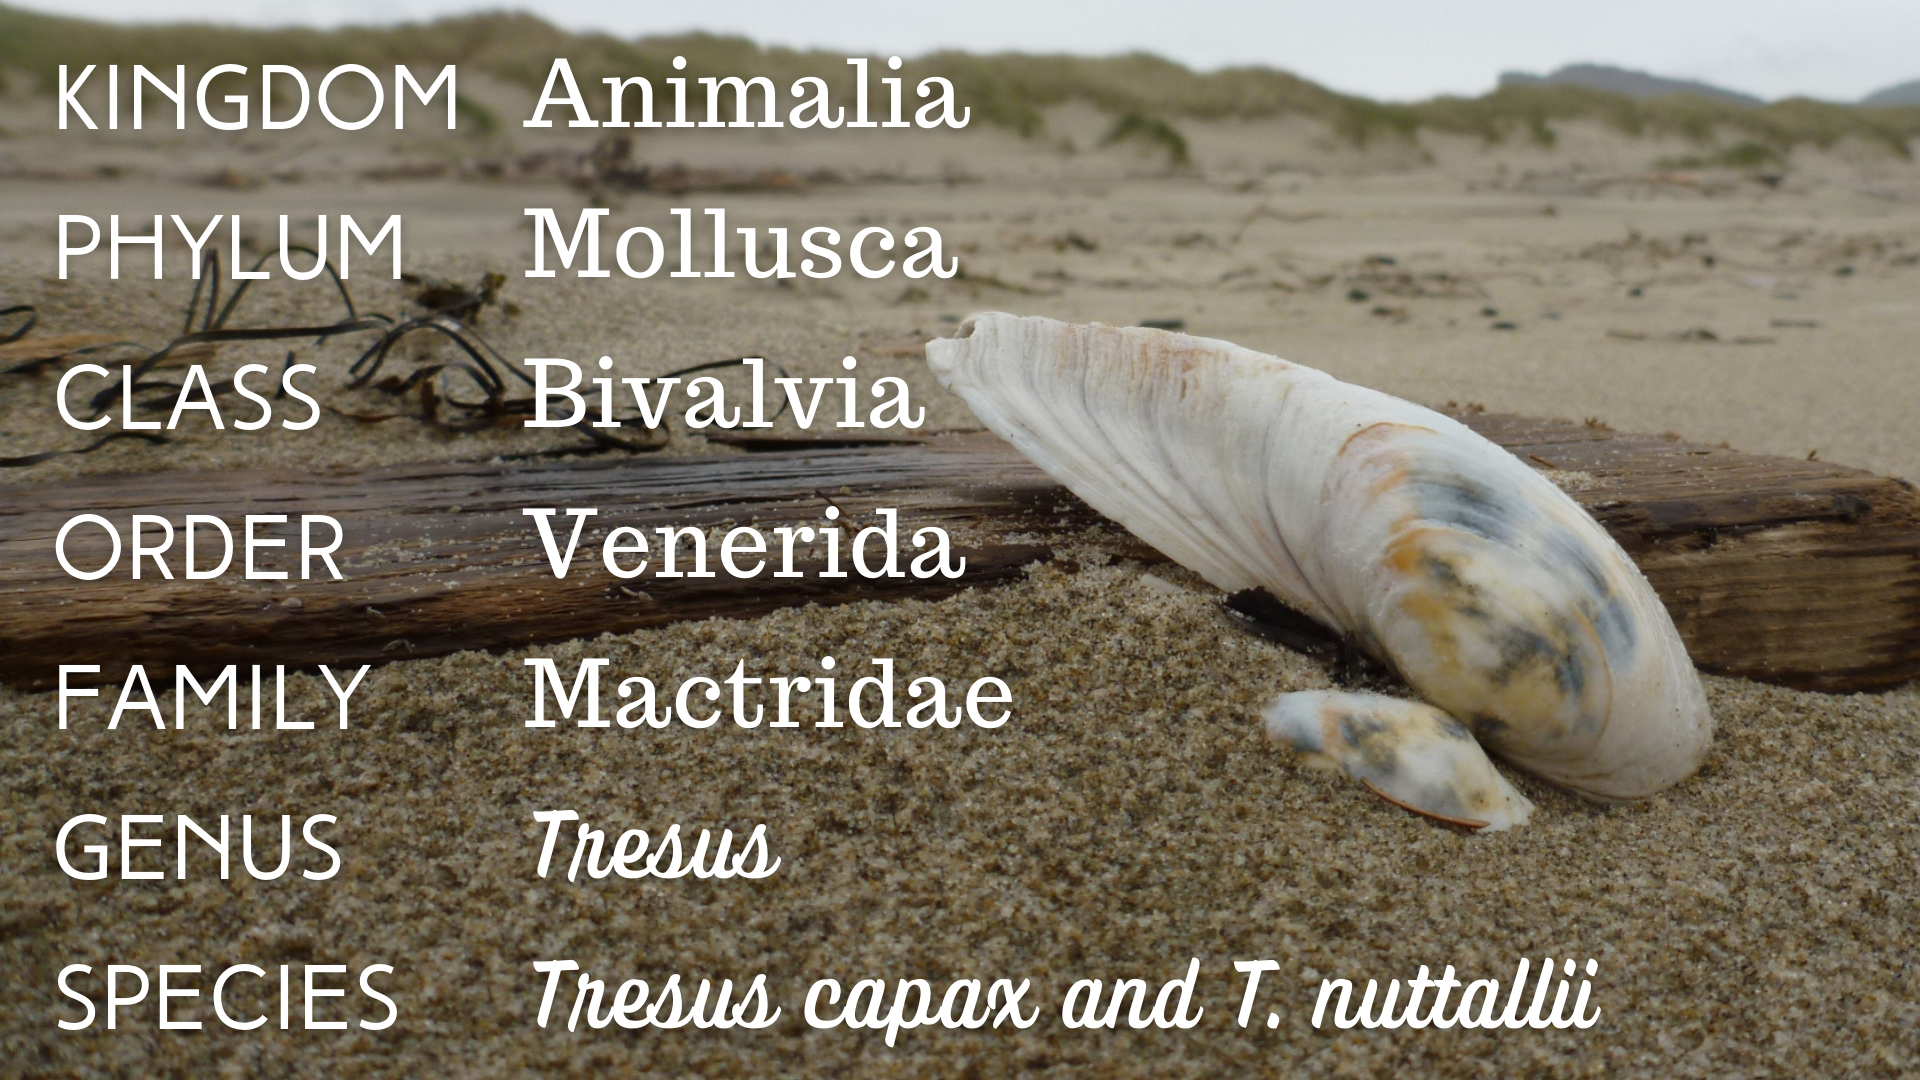 Classification text reads, Kingdom Animalia, Phylum Mollusca, Class Bivalvia, Order Venerida, Family Mactridae, Genus/Species Tresus capax